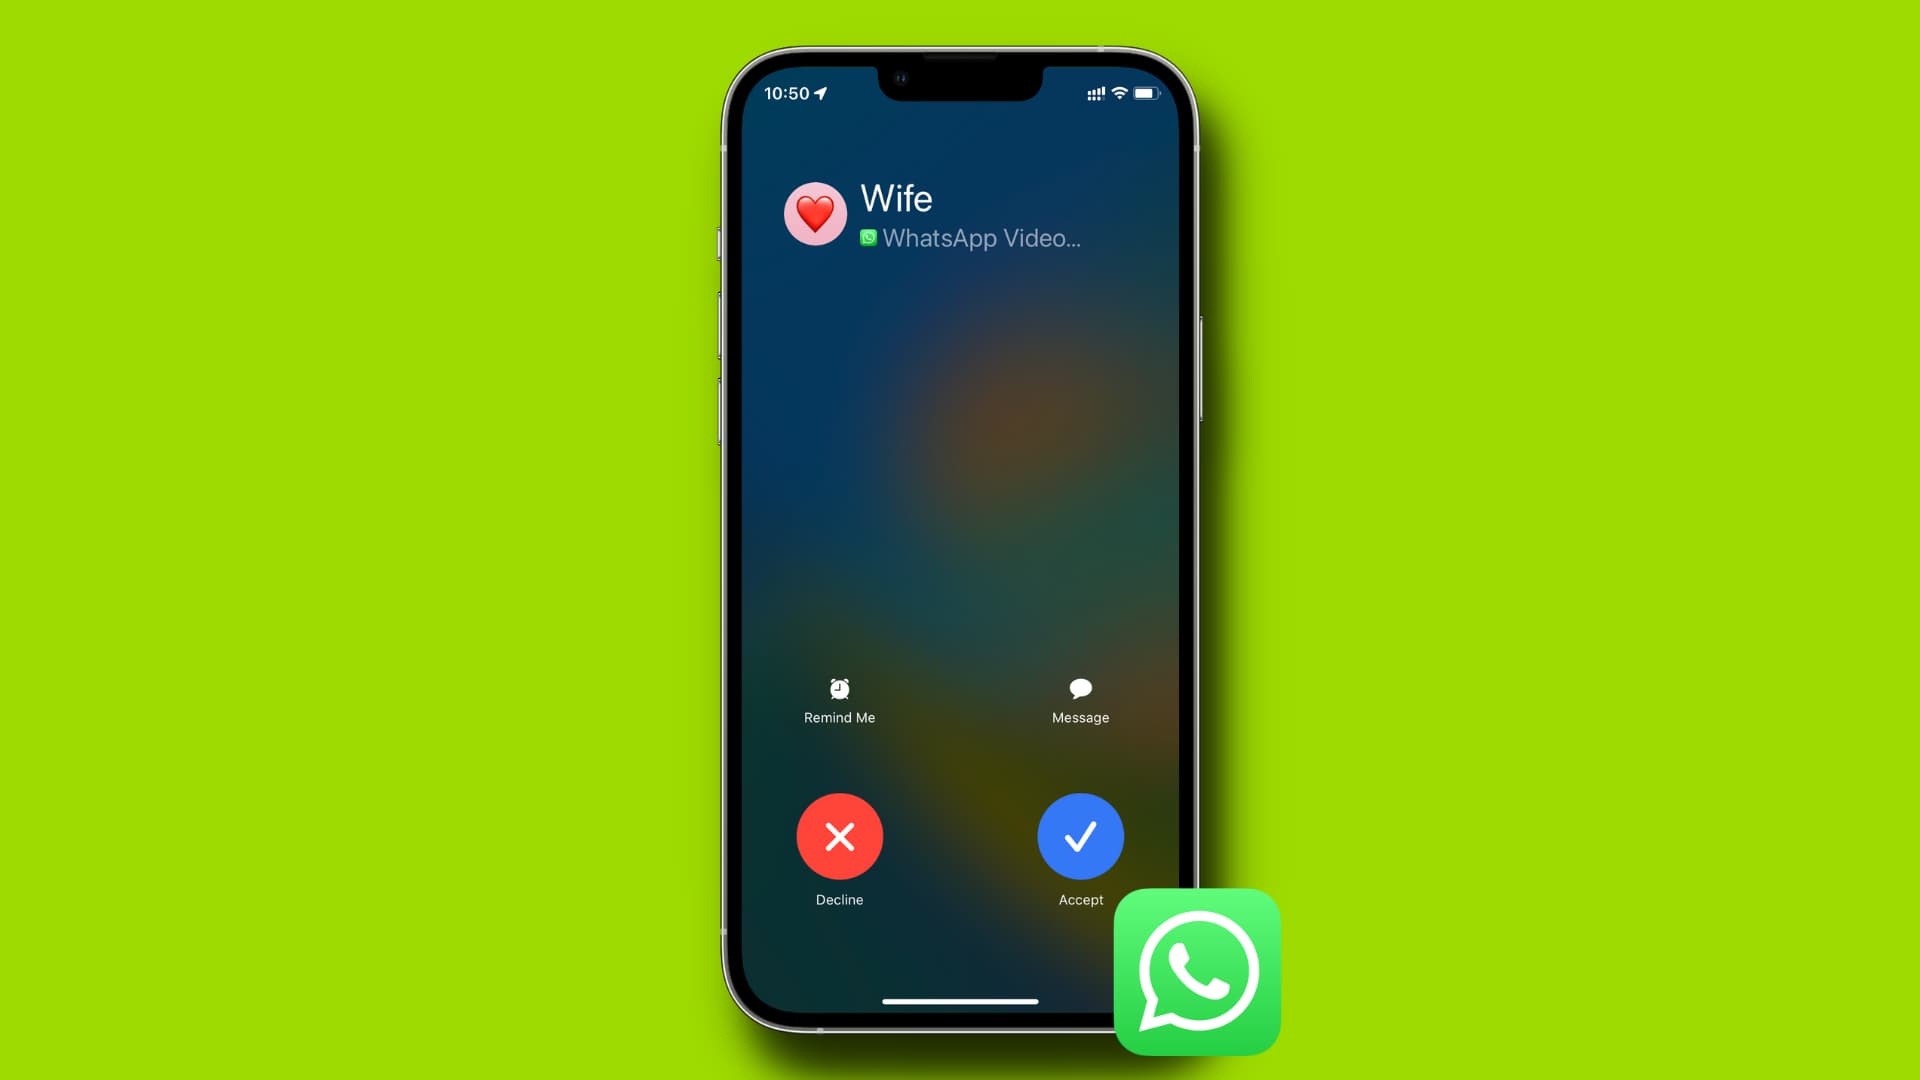 Getting a WhatsApp video call on iPhone